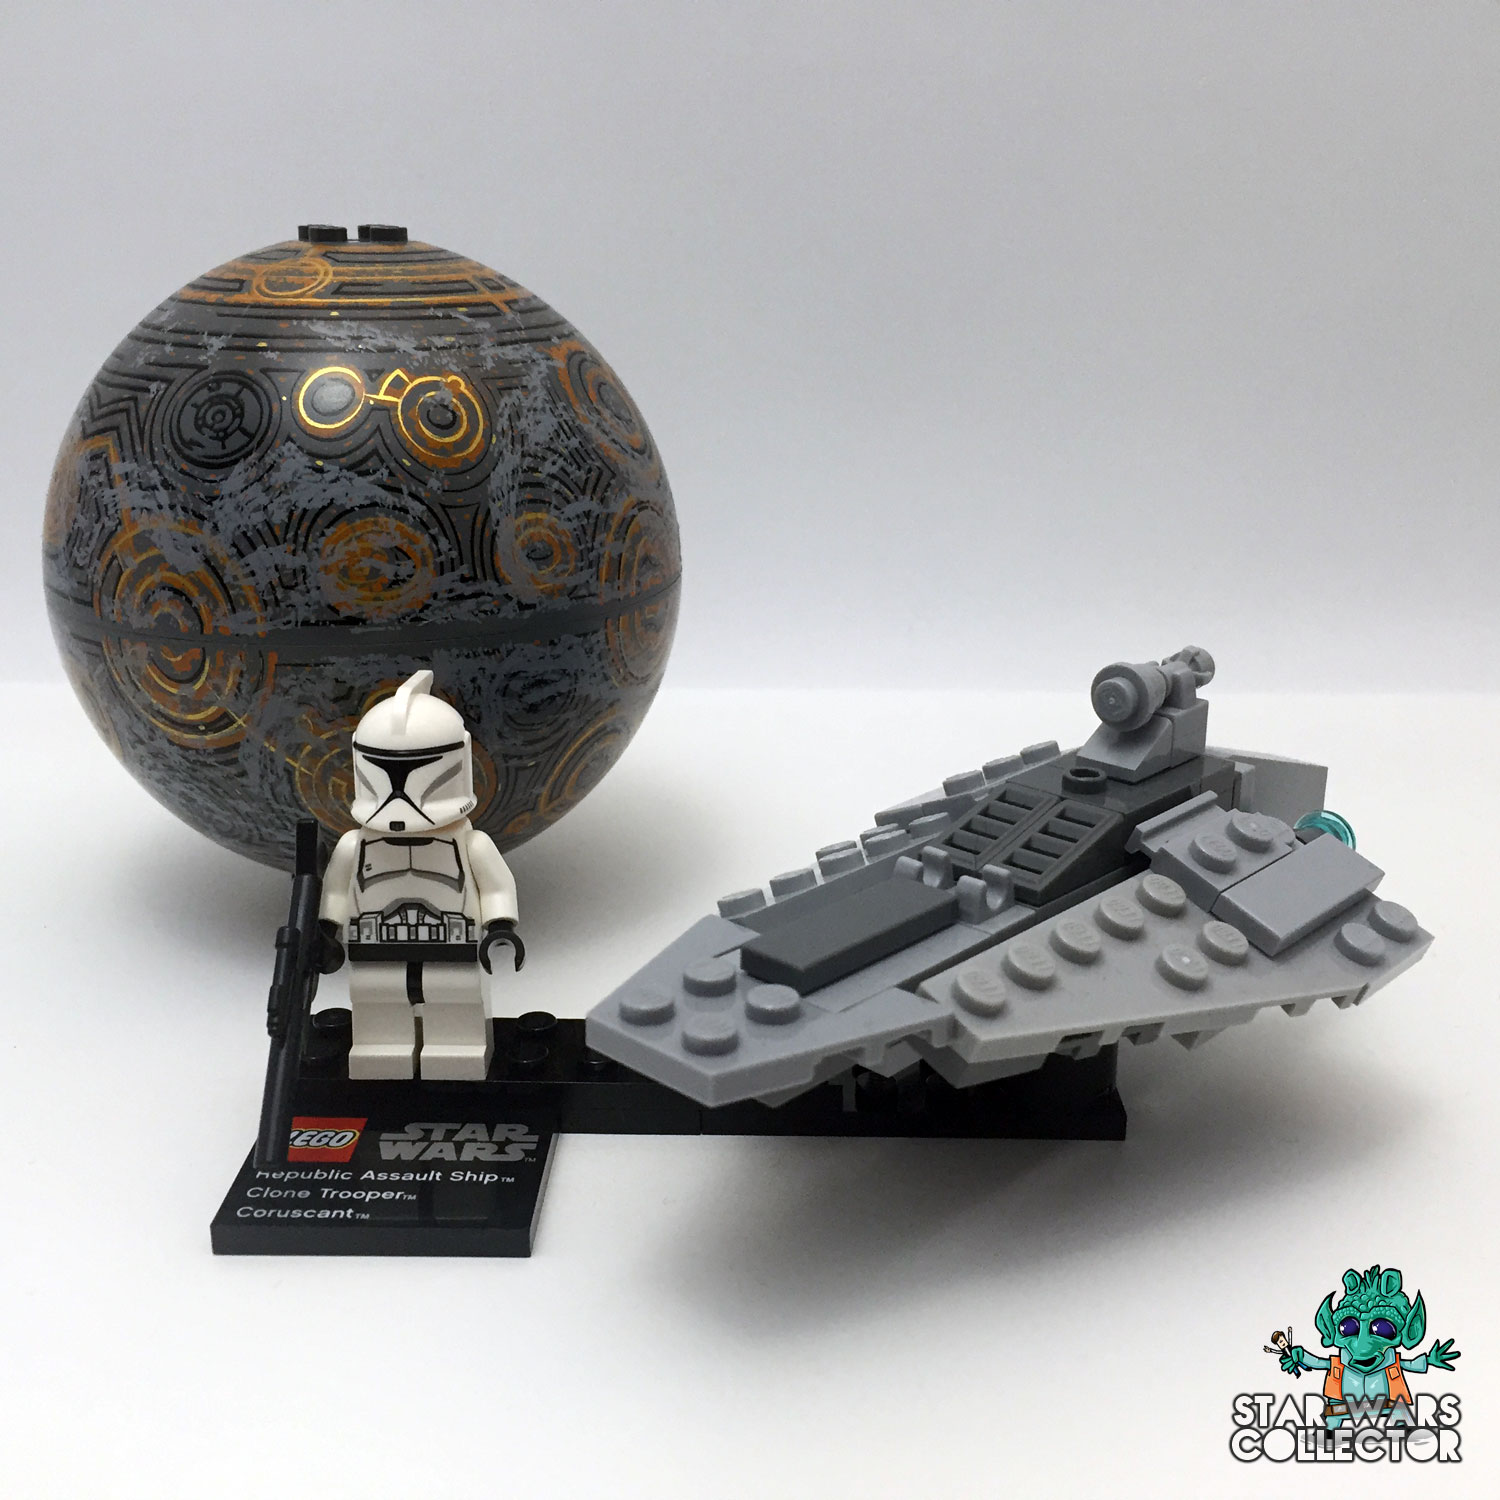 LEGO Star Wars 75007 Republic Assault Striker & Coruscant